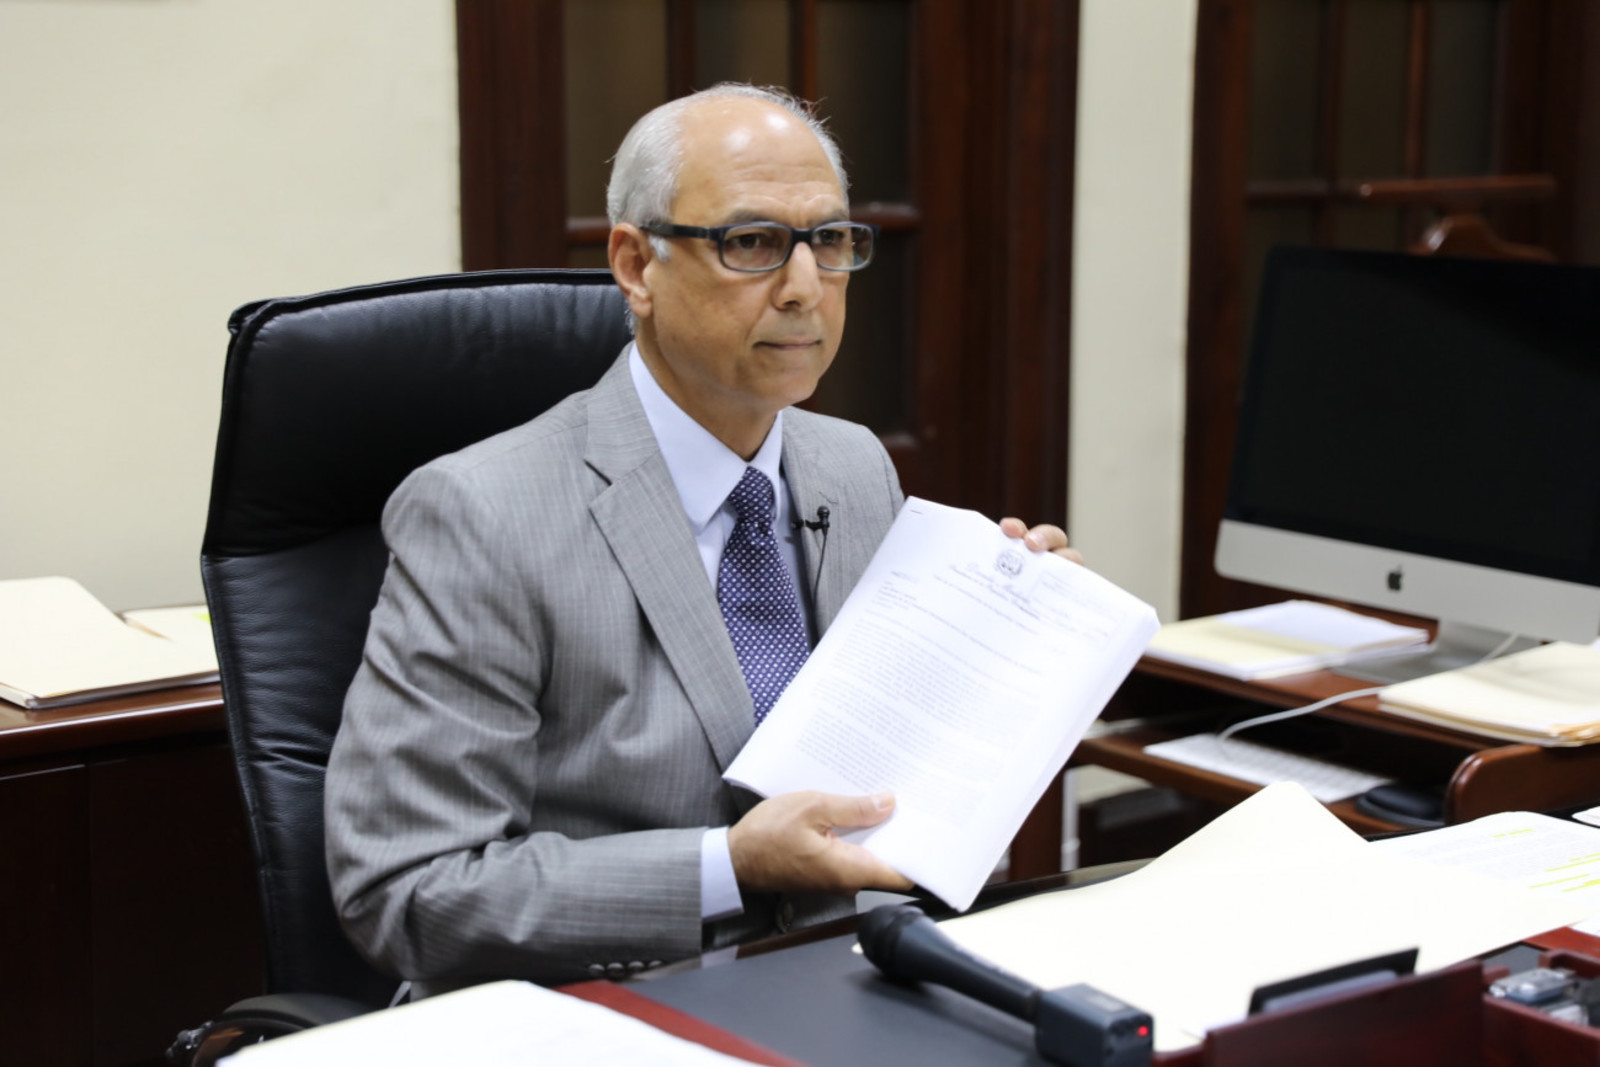 REPÚBLICA DOMINICANA: Poder Ejecutivo ha cumplido de manera rigurosa con entrega al Congreso Nacional de informes medidas adoptadas durante estado de emergencia